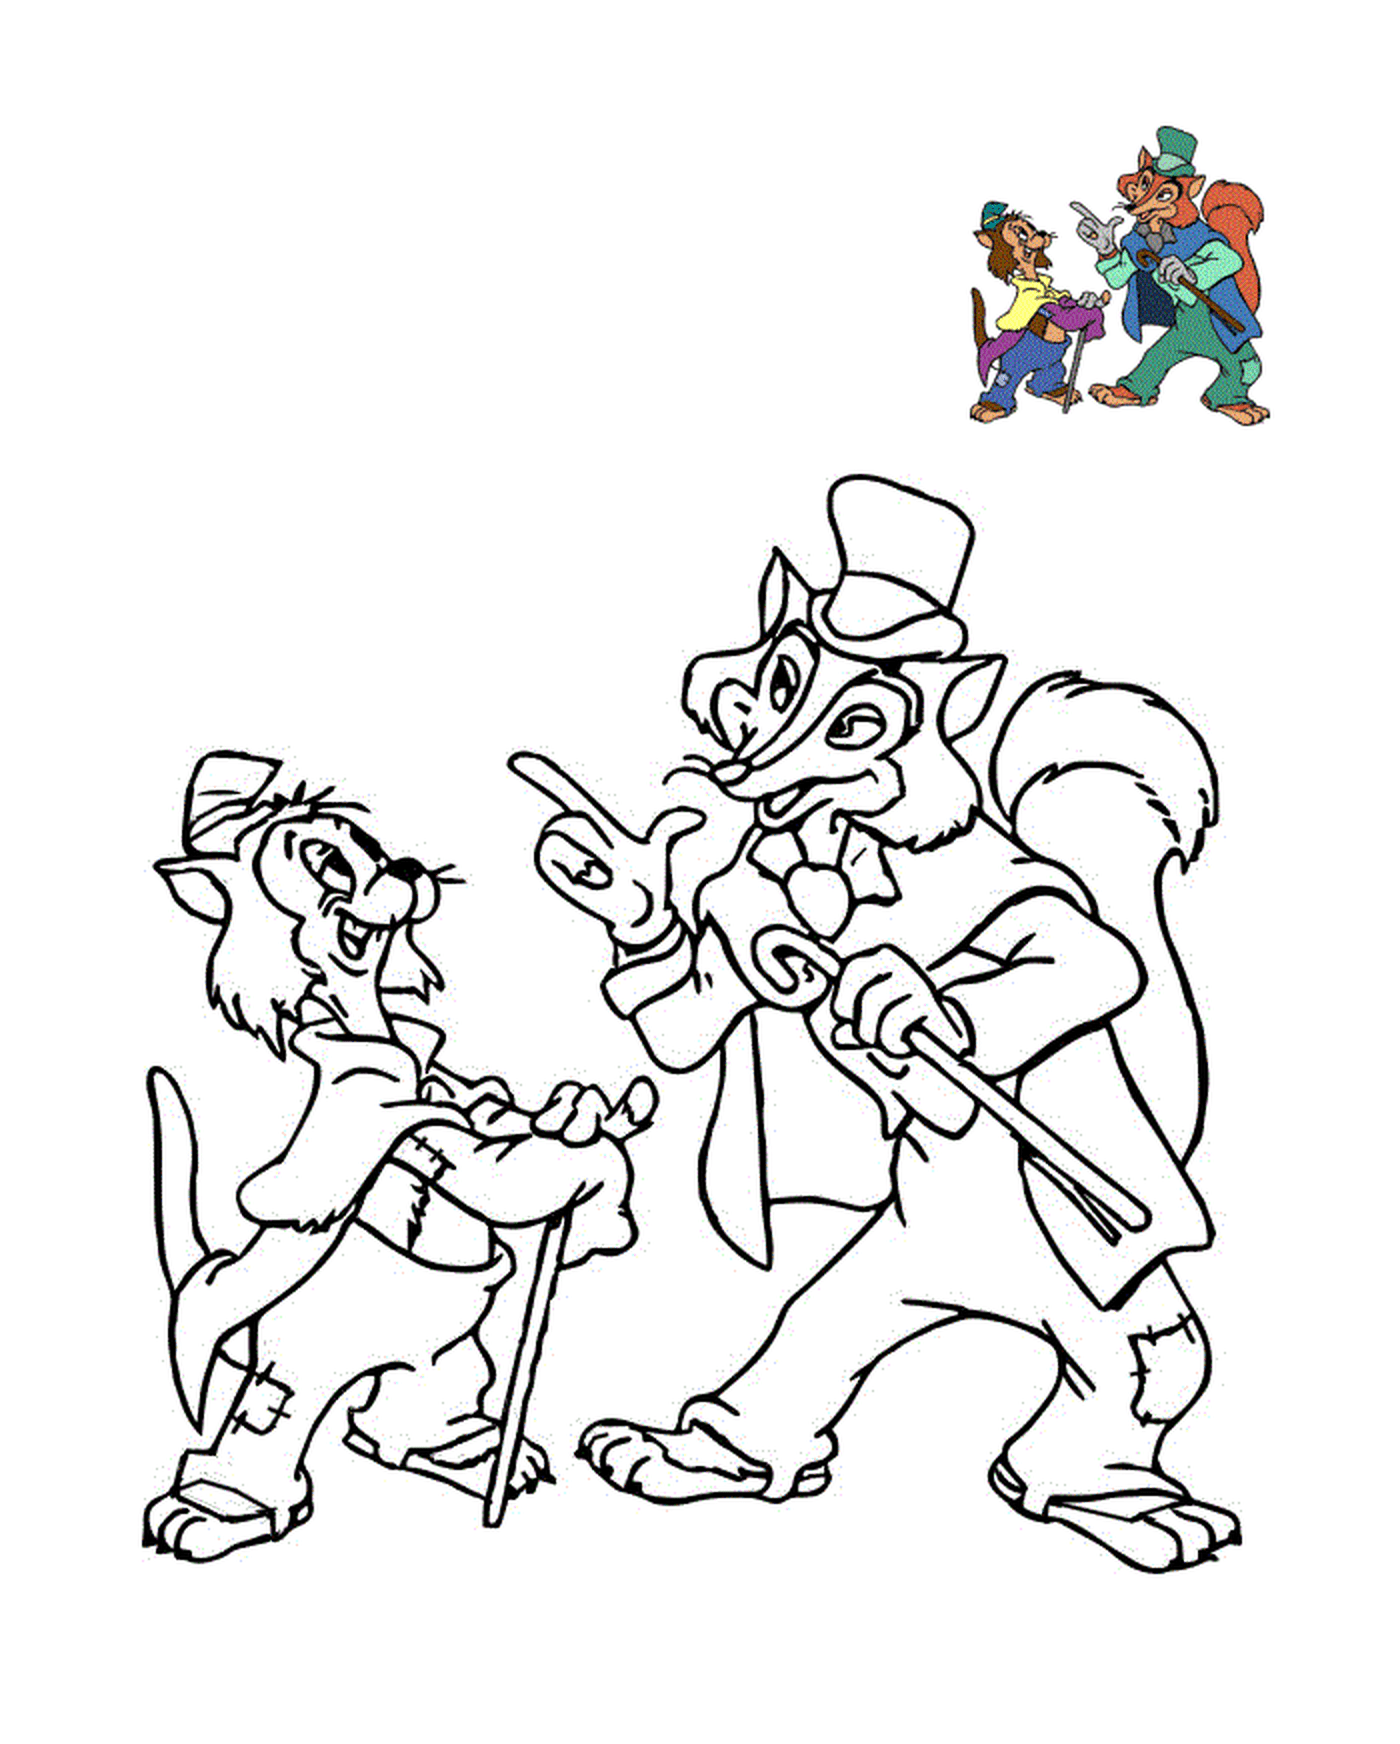  Gideon und Grand Coquin, Pinocchio 1940 